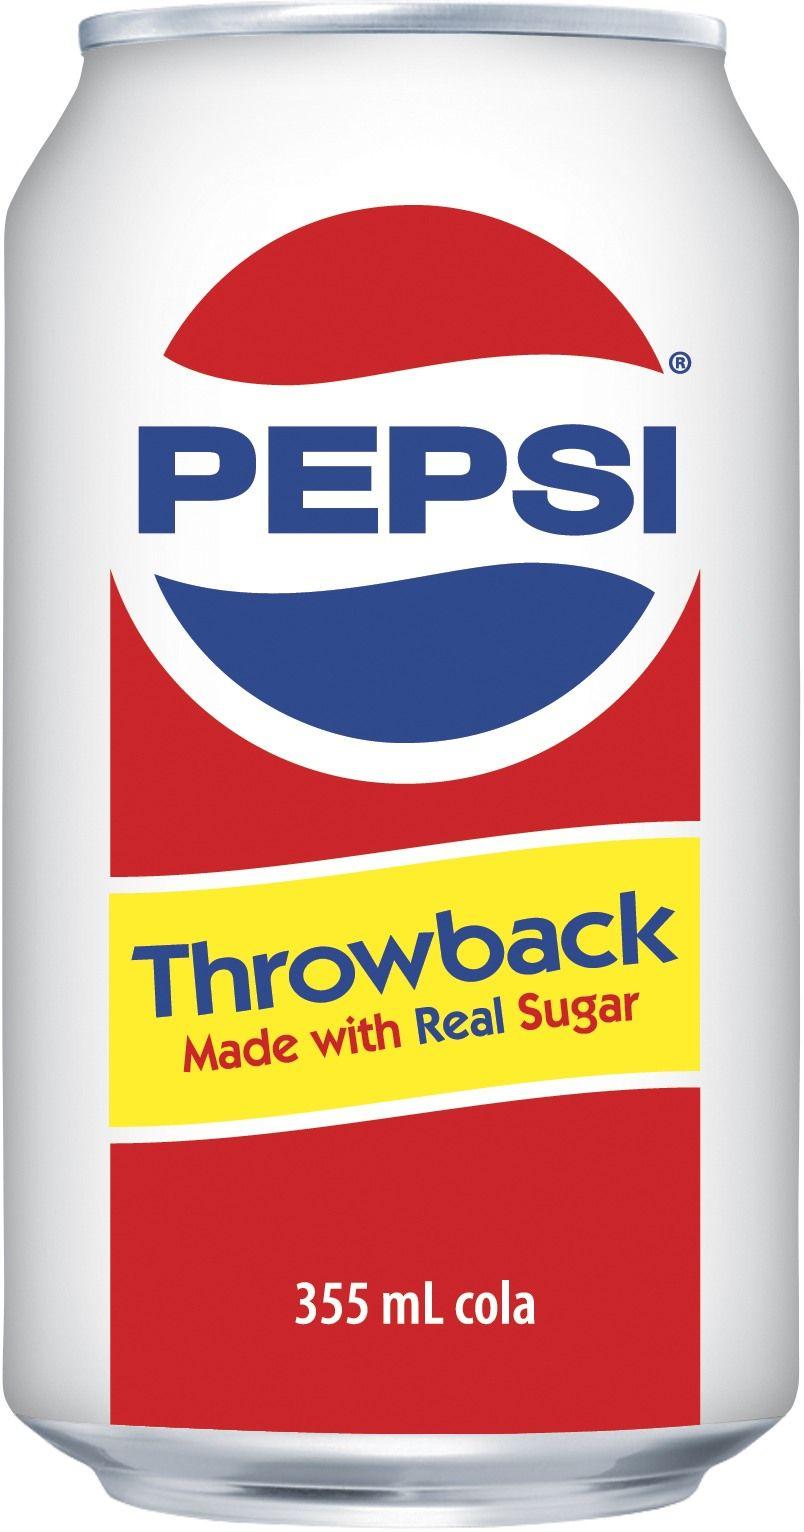 1960s Pepsi Logo - Brady's Bunch of Lorain County Nostalgia: Pepsi Memories